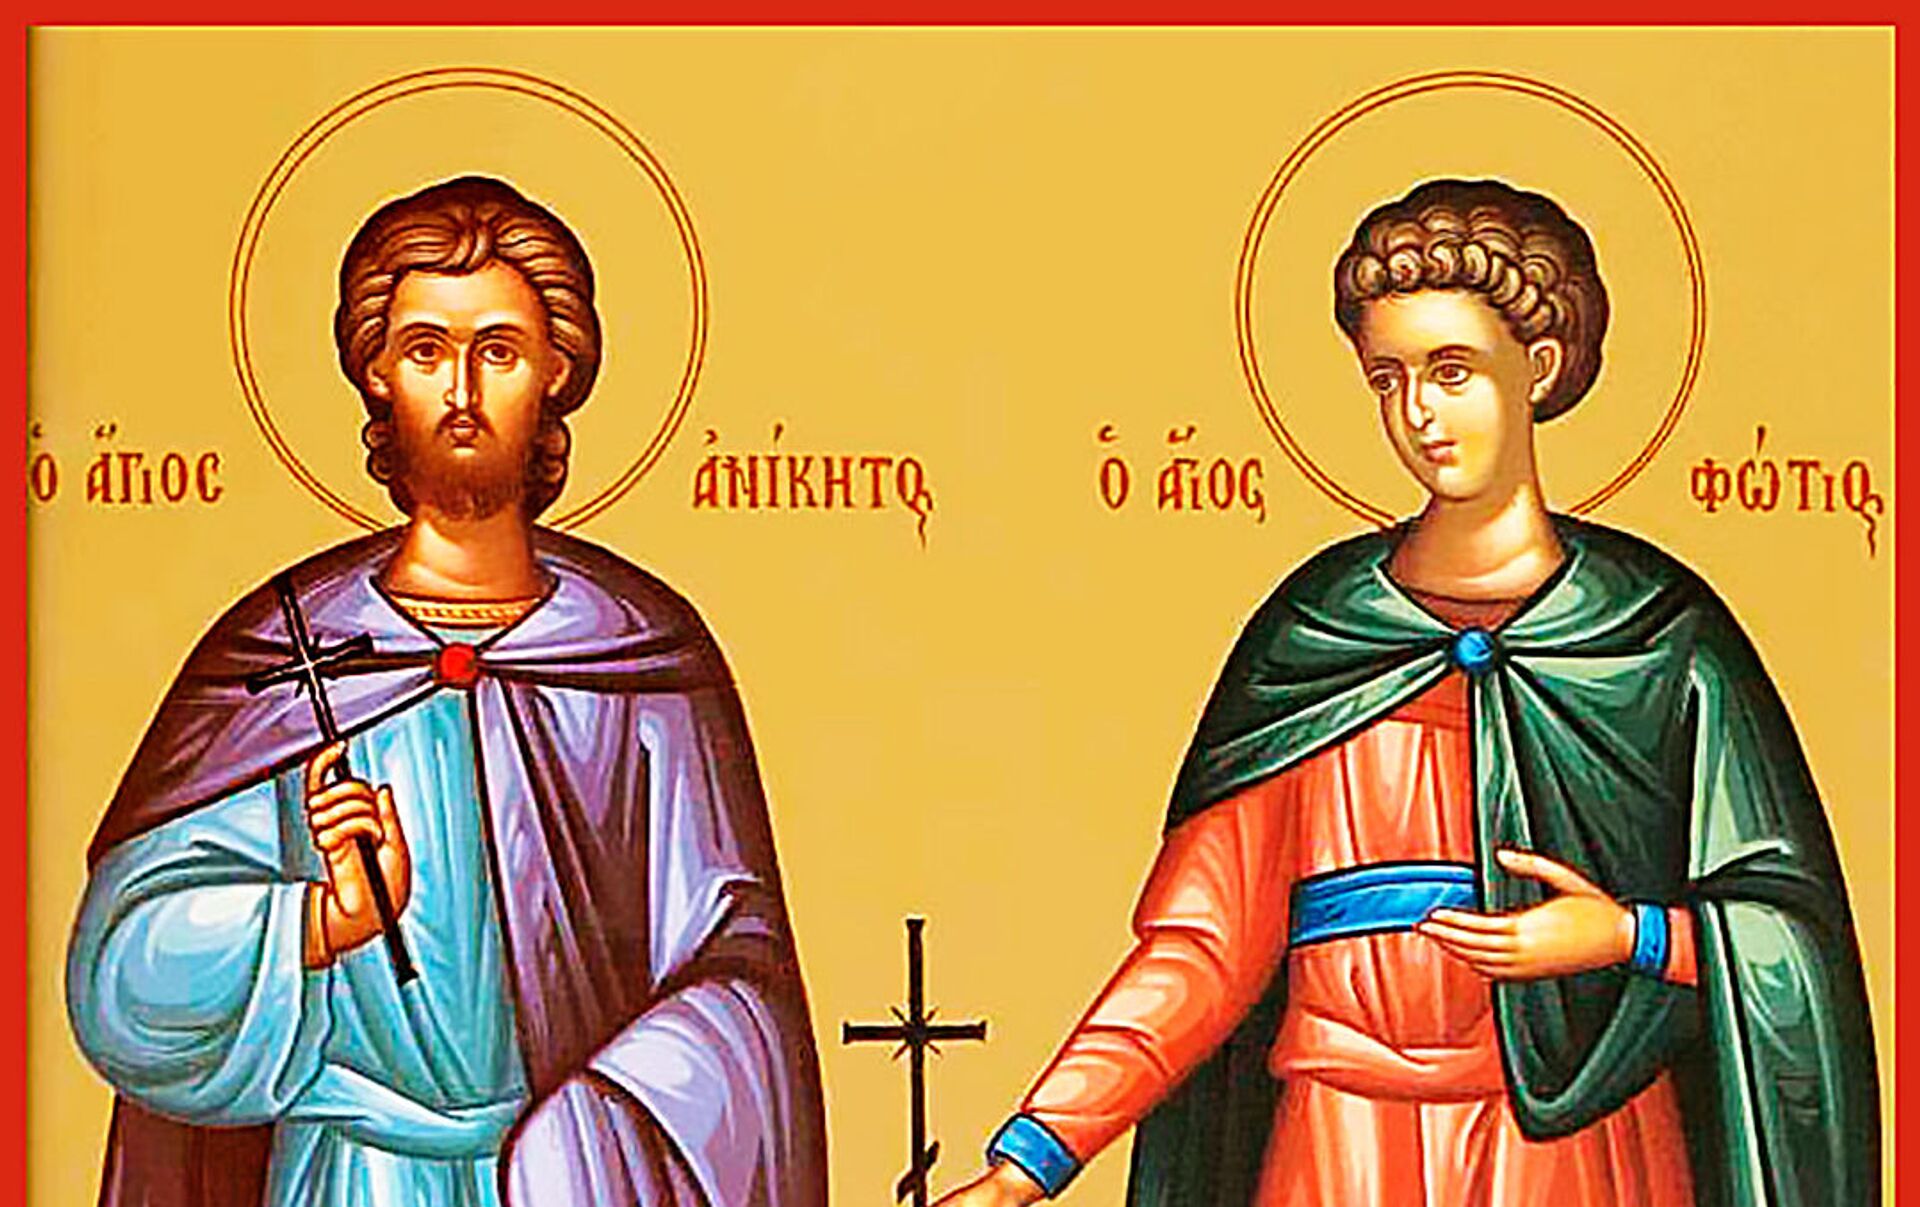 25 августа 2020. Святой мученик Аникита. Св. Фотий и Аникита. Фотий и Аникита икона. Святой мученик Фотий.